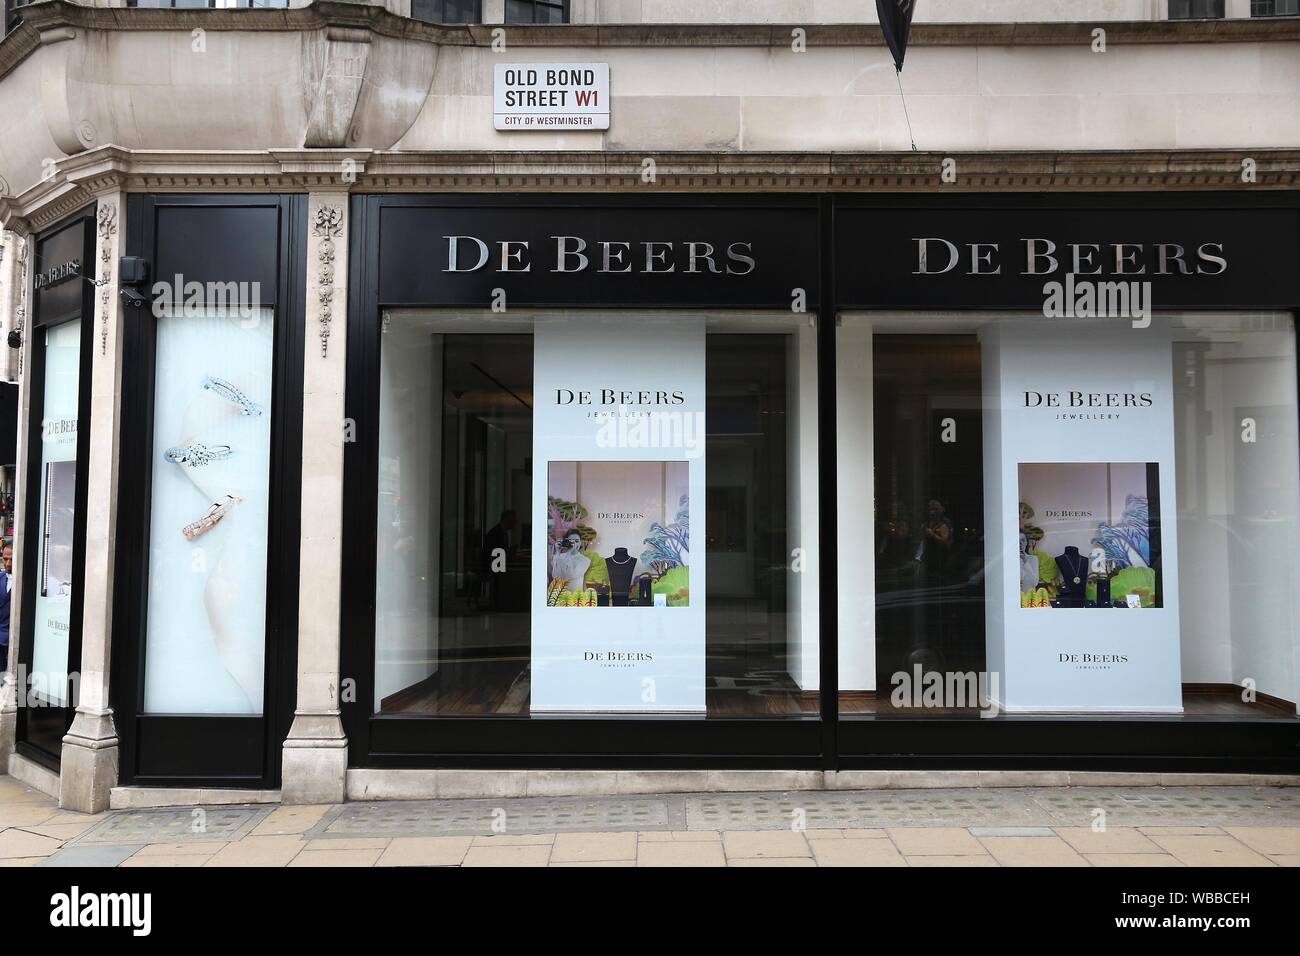 LONDON, UK - JULY 9, 2016: De Beers jewellery shop at Old Bond Street in London. Bond Street is a major shopping street in the West End of London. Stock Photo